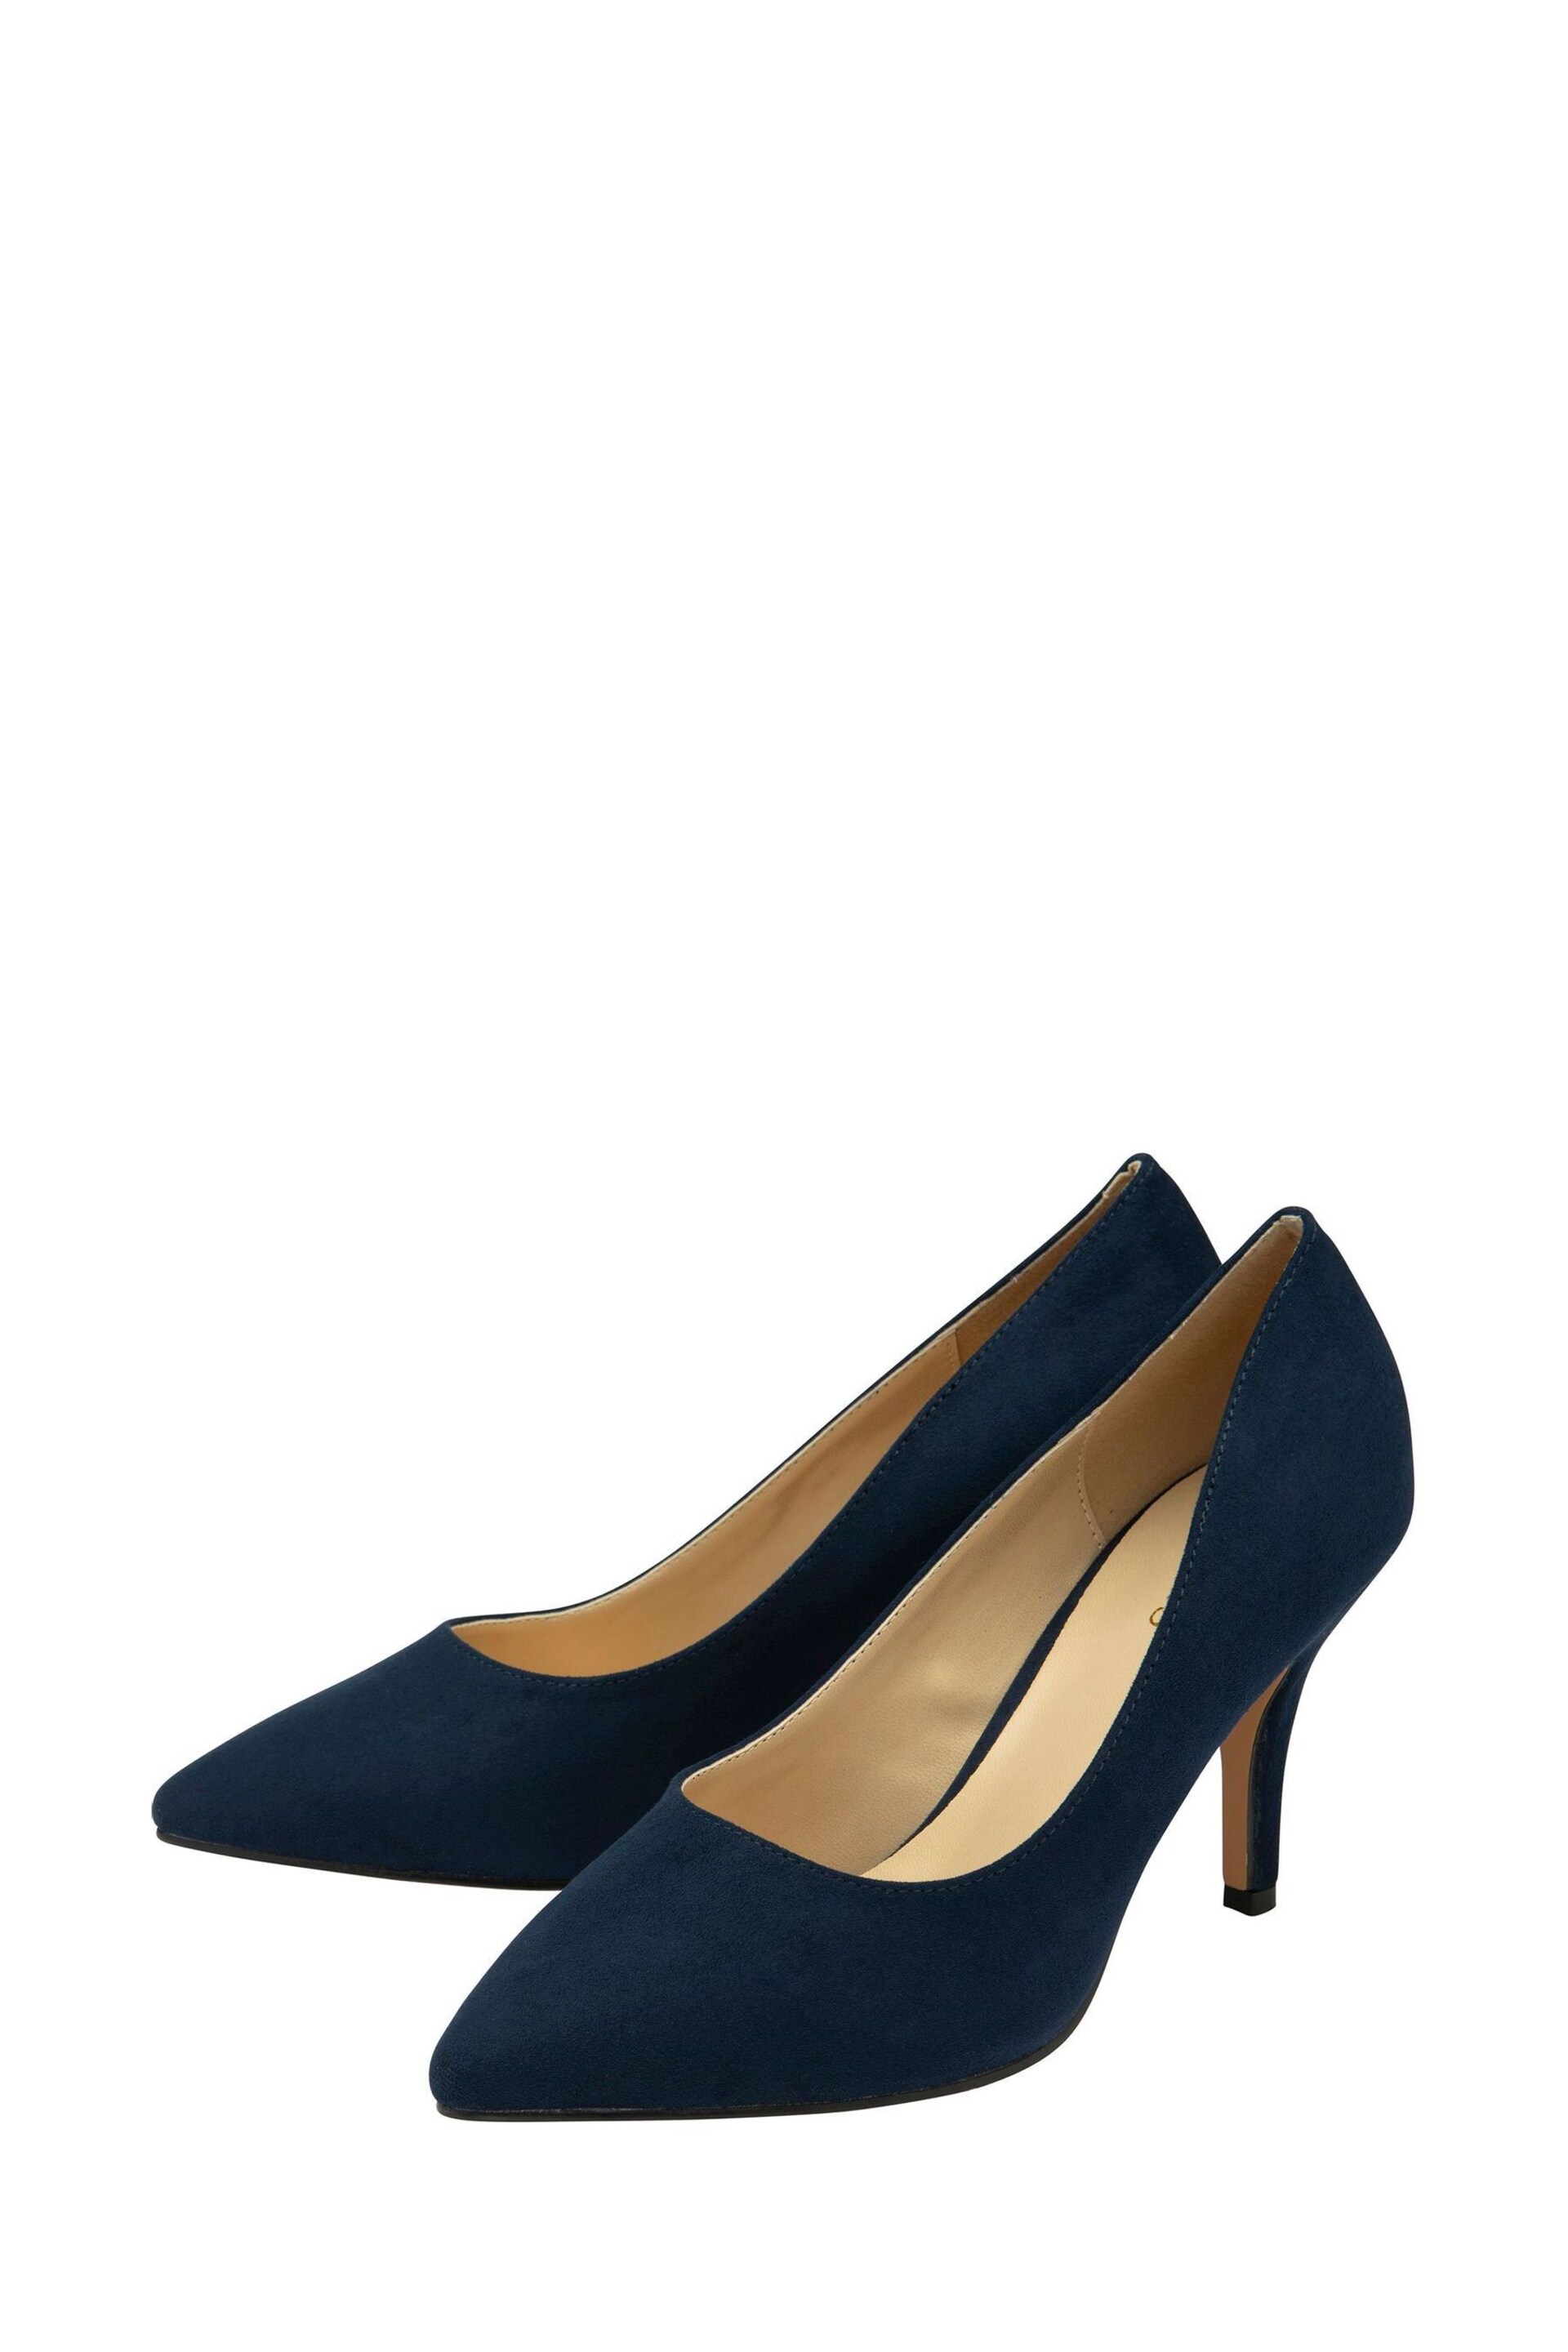 Lotus Blue Stiletto-Heel Court Shoes - Image 2 of 4